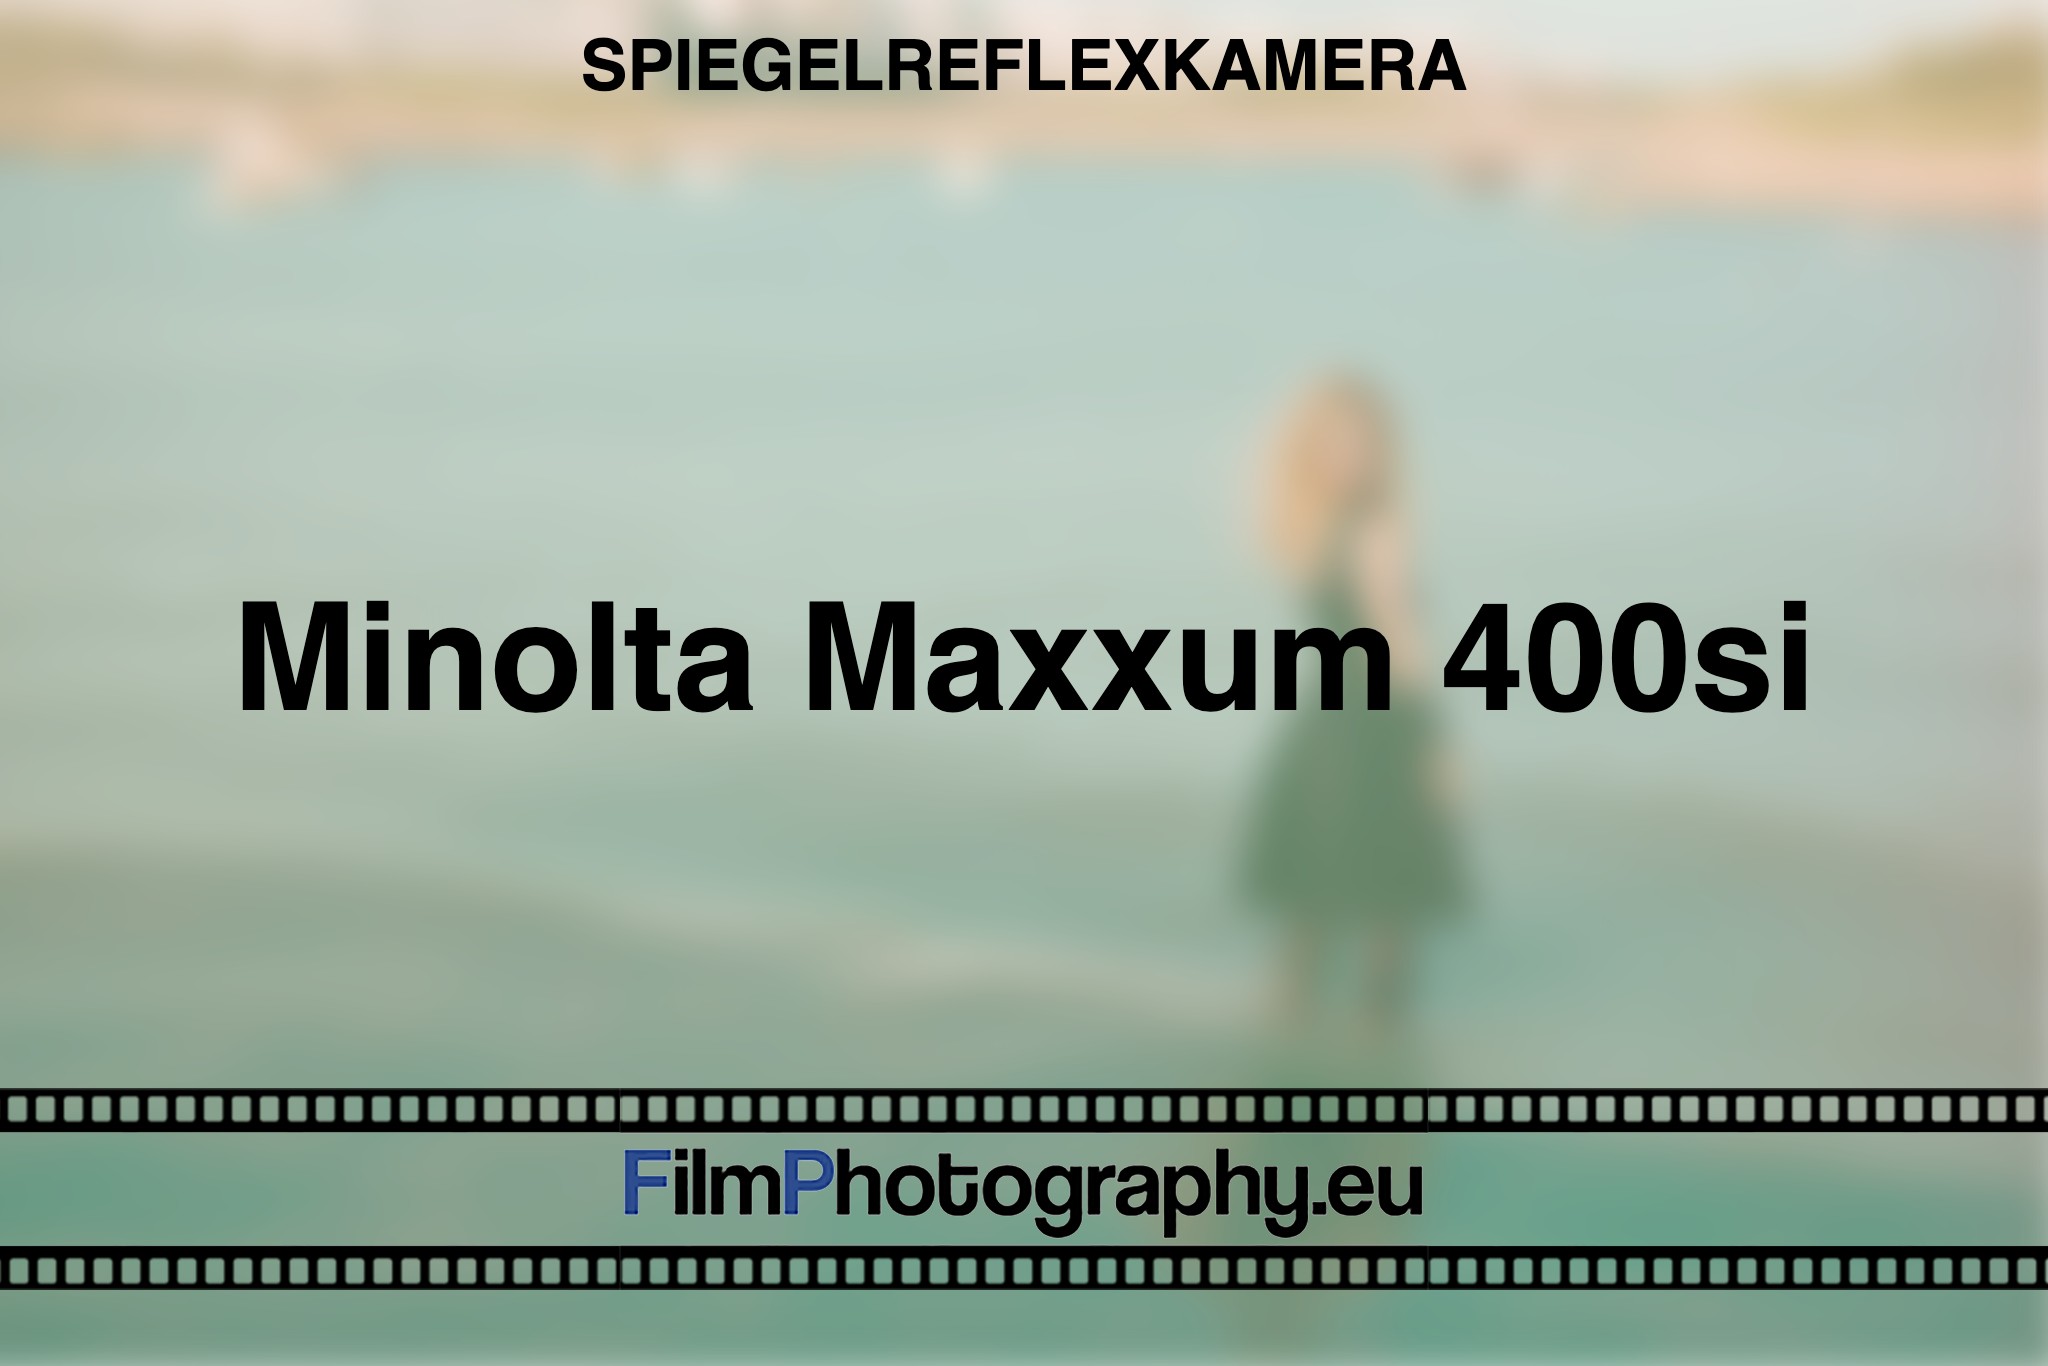 minolta-maxxum-400si-spiegelreflexkamera-bnv